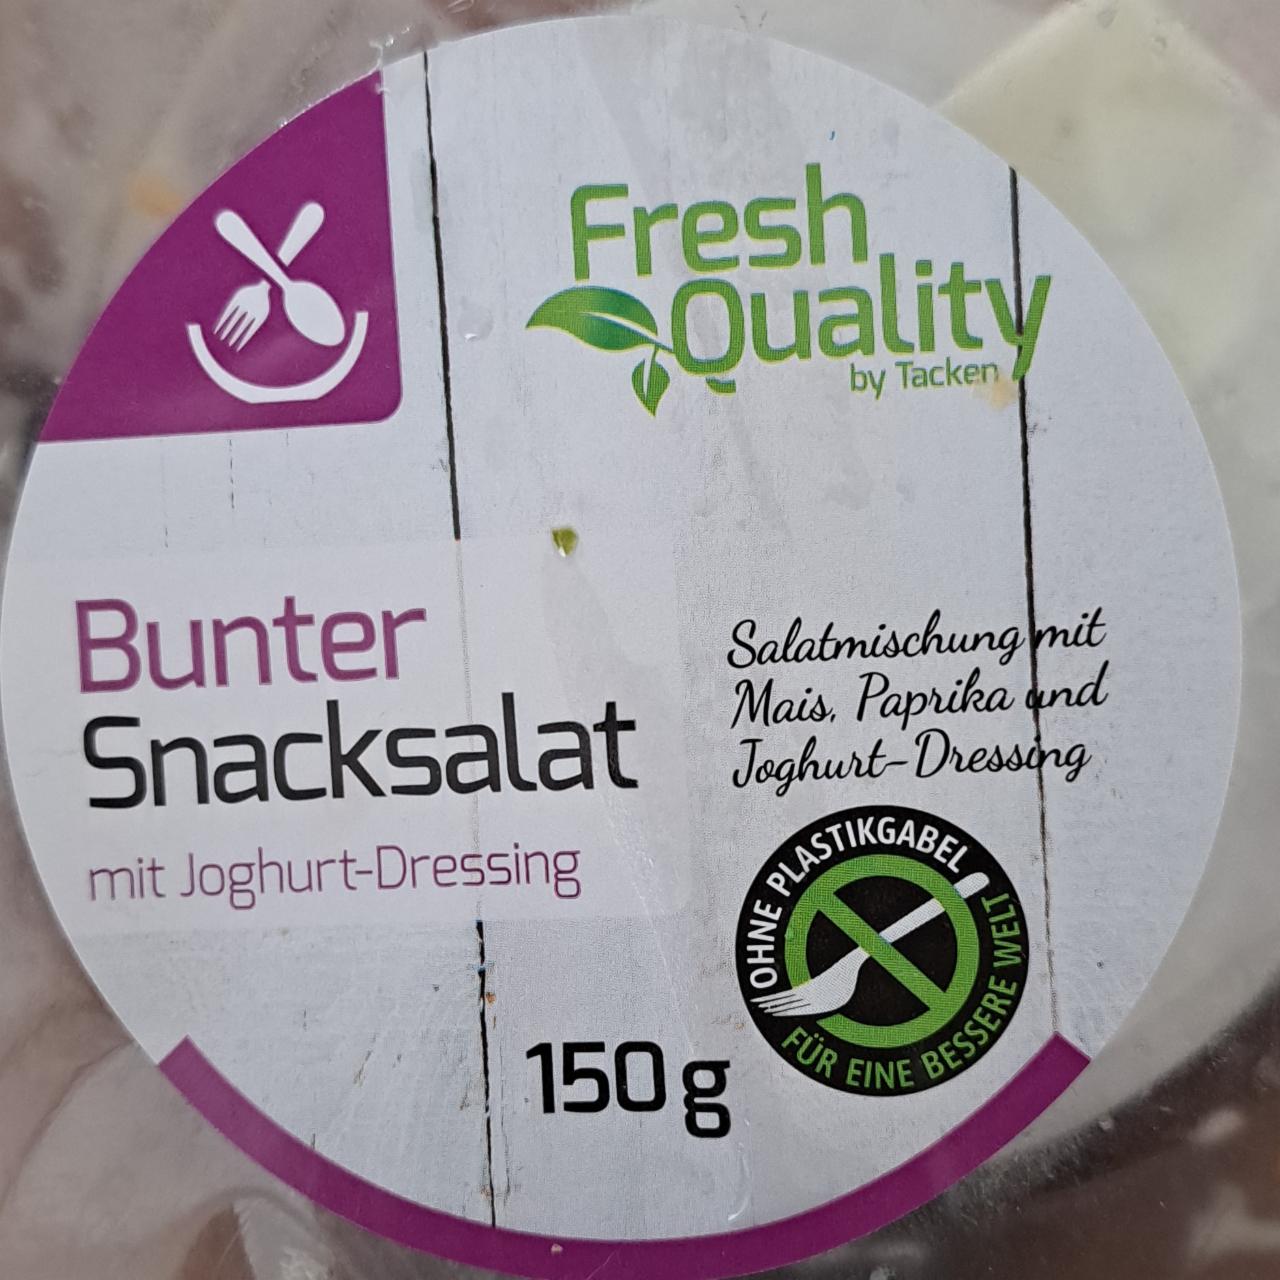 Фото - Bunter Snacksalat mit Joghurt-Dressing Fresh Quality